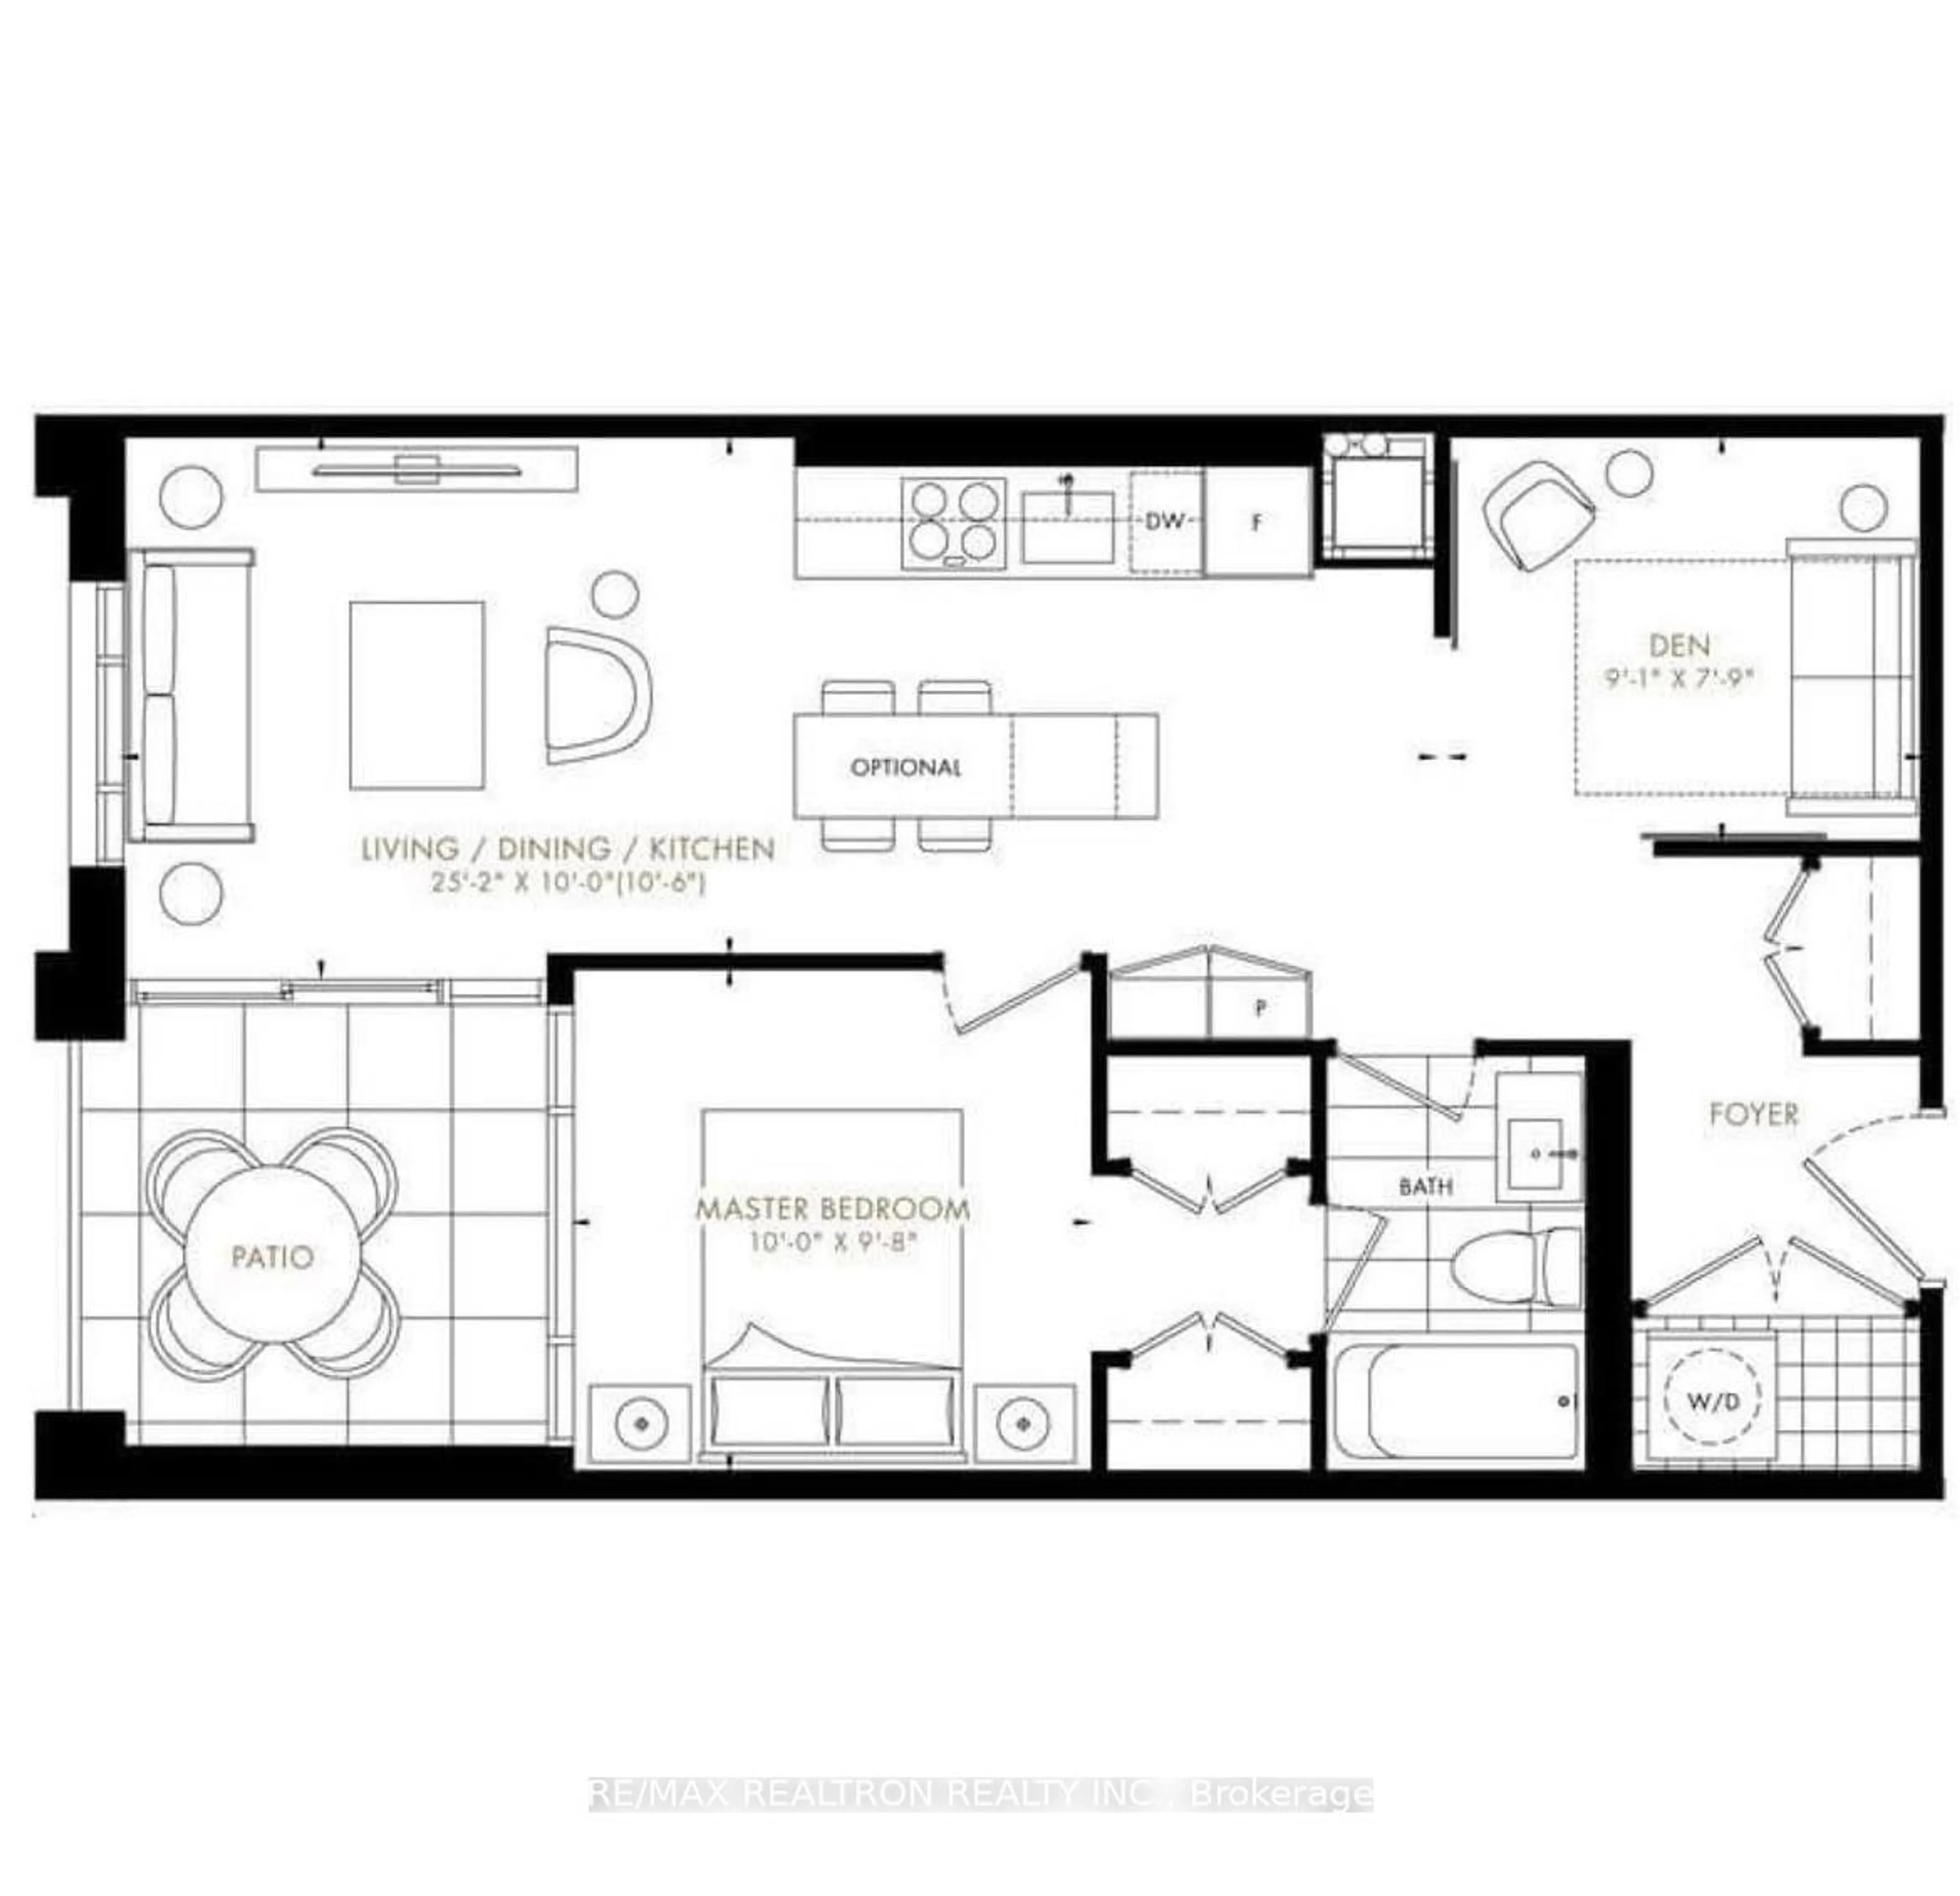 Floor plan for 21 Park St #103, Mississauga Ontario L5G 0C2